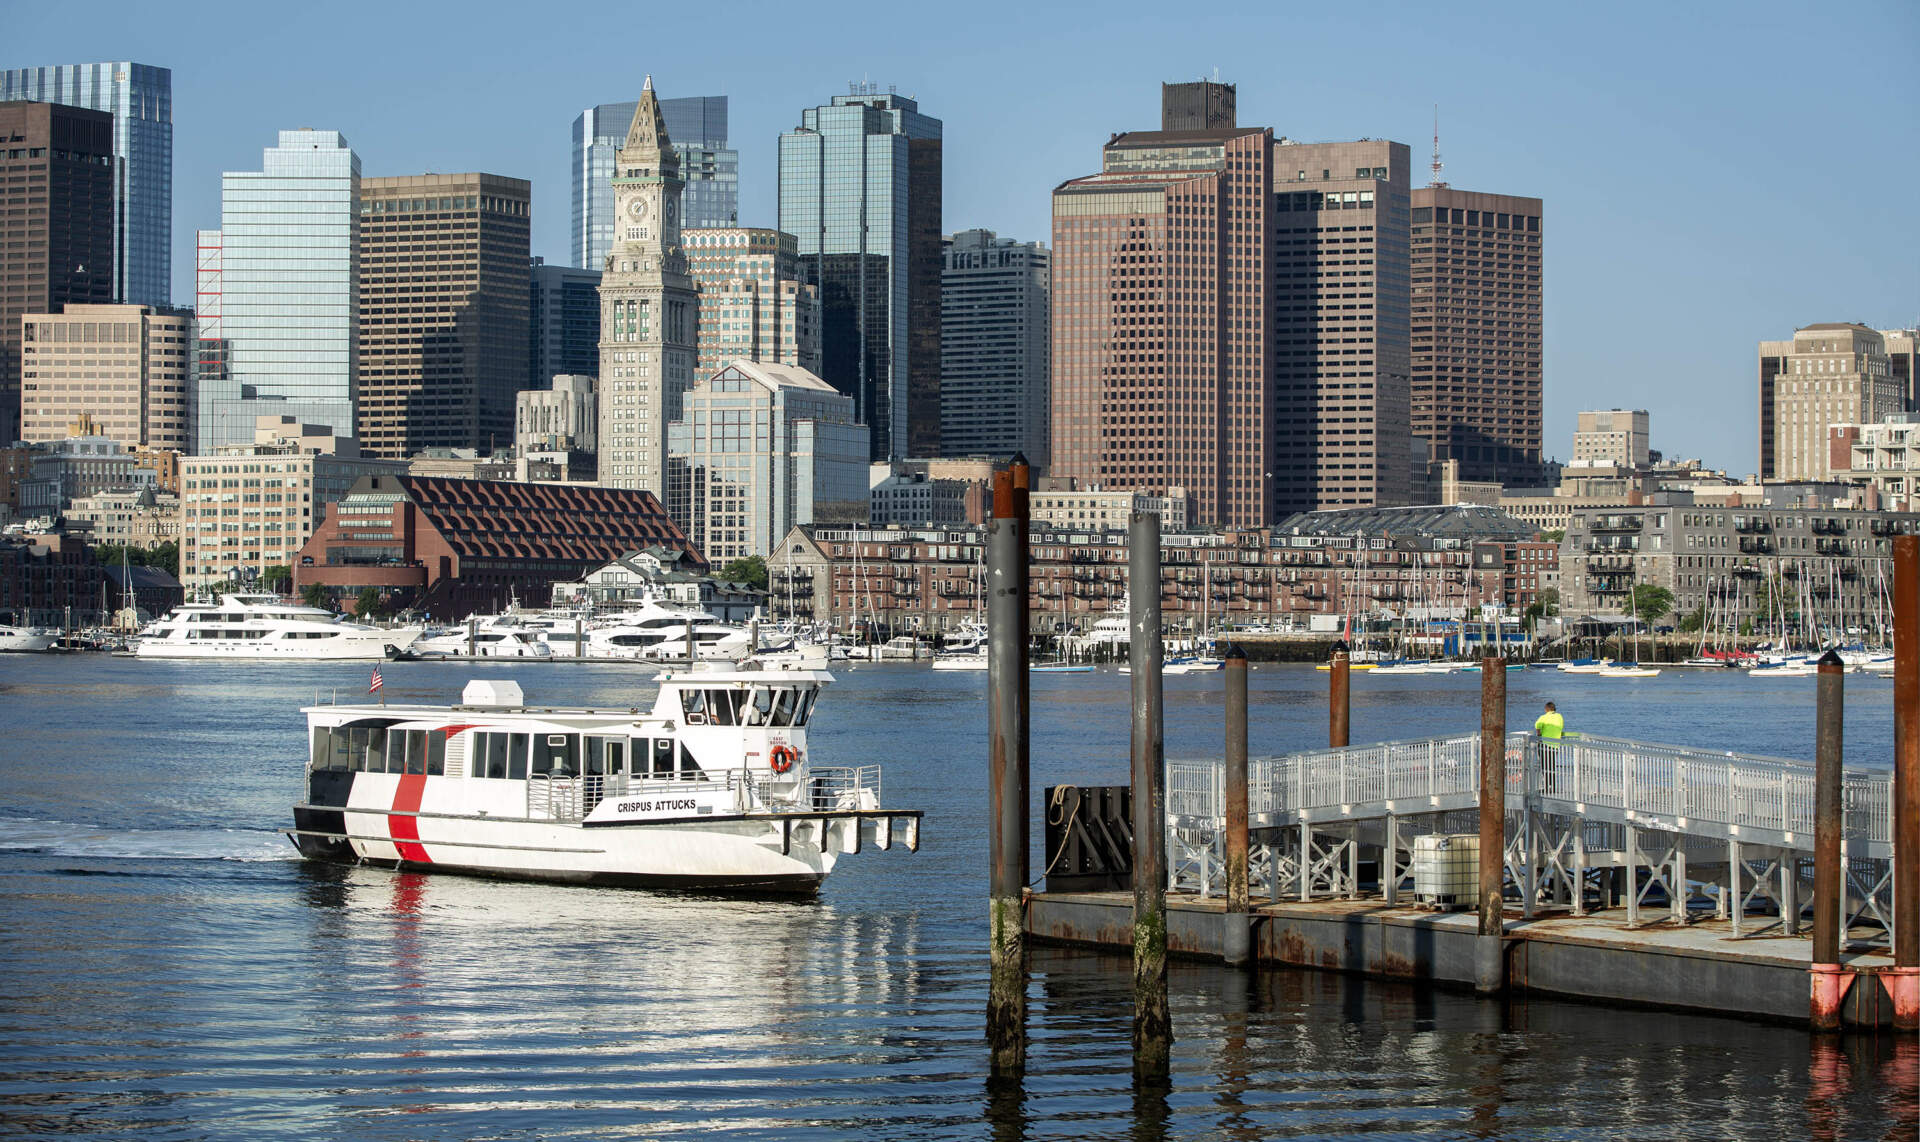 A ferry approaches the dock on East Pier Drive in East Boston. (Robin Lubbock/WBUR)